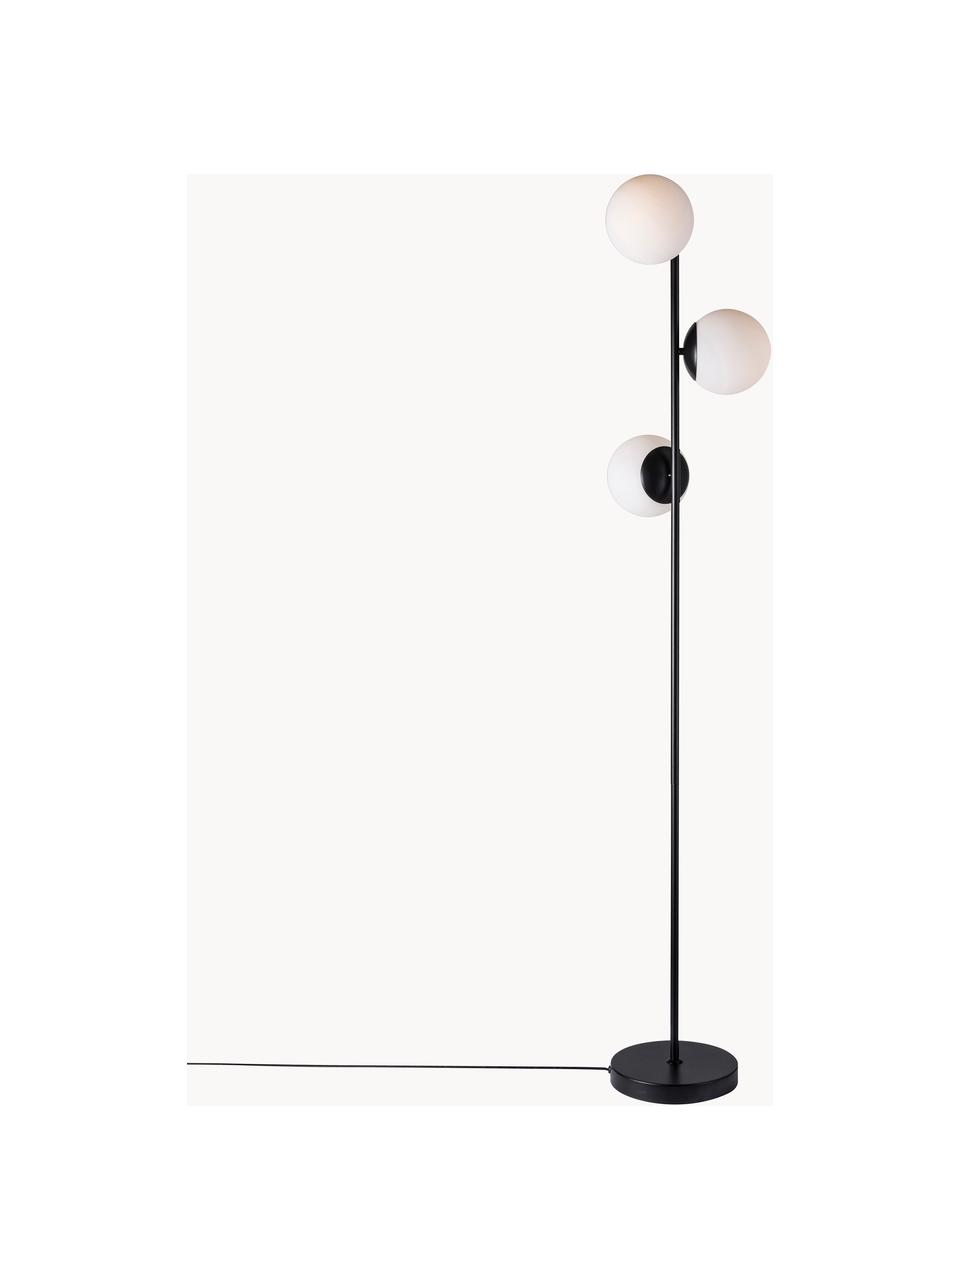 Lampadaire moderne Lilly, Noir, blanc, haut. 150 cm